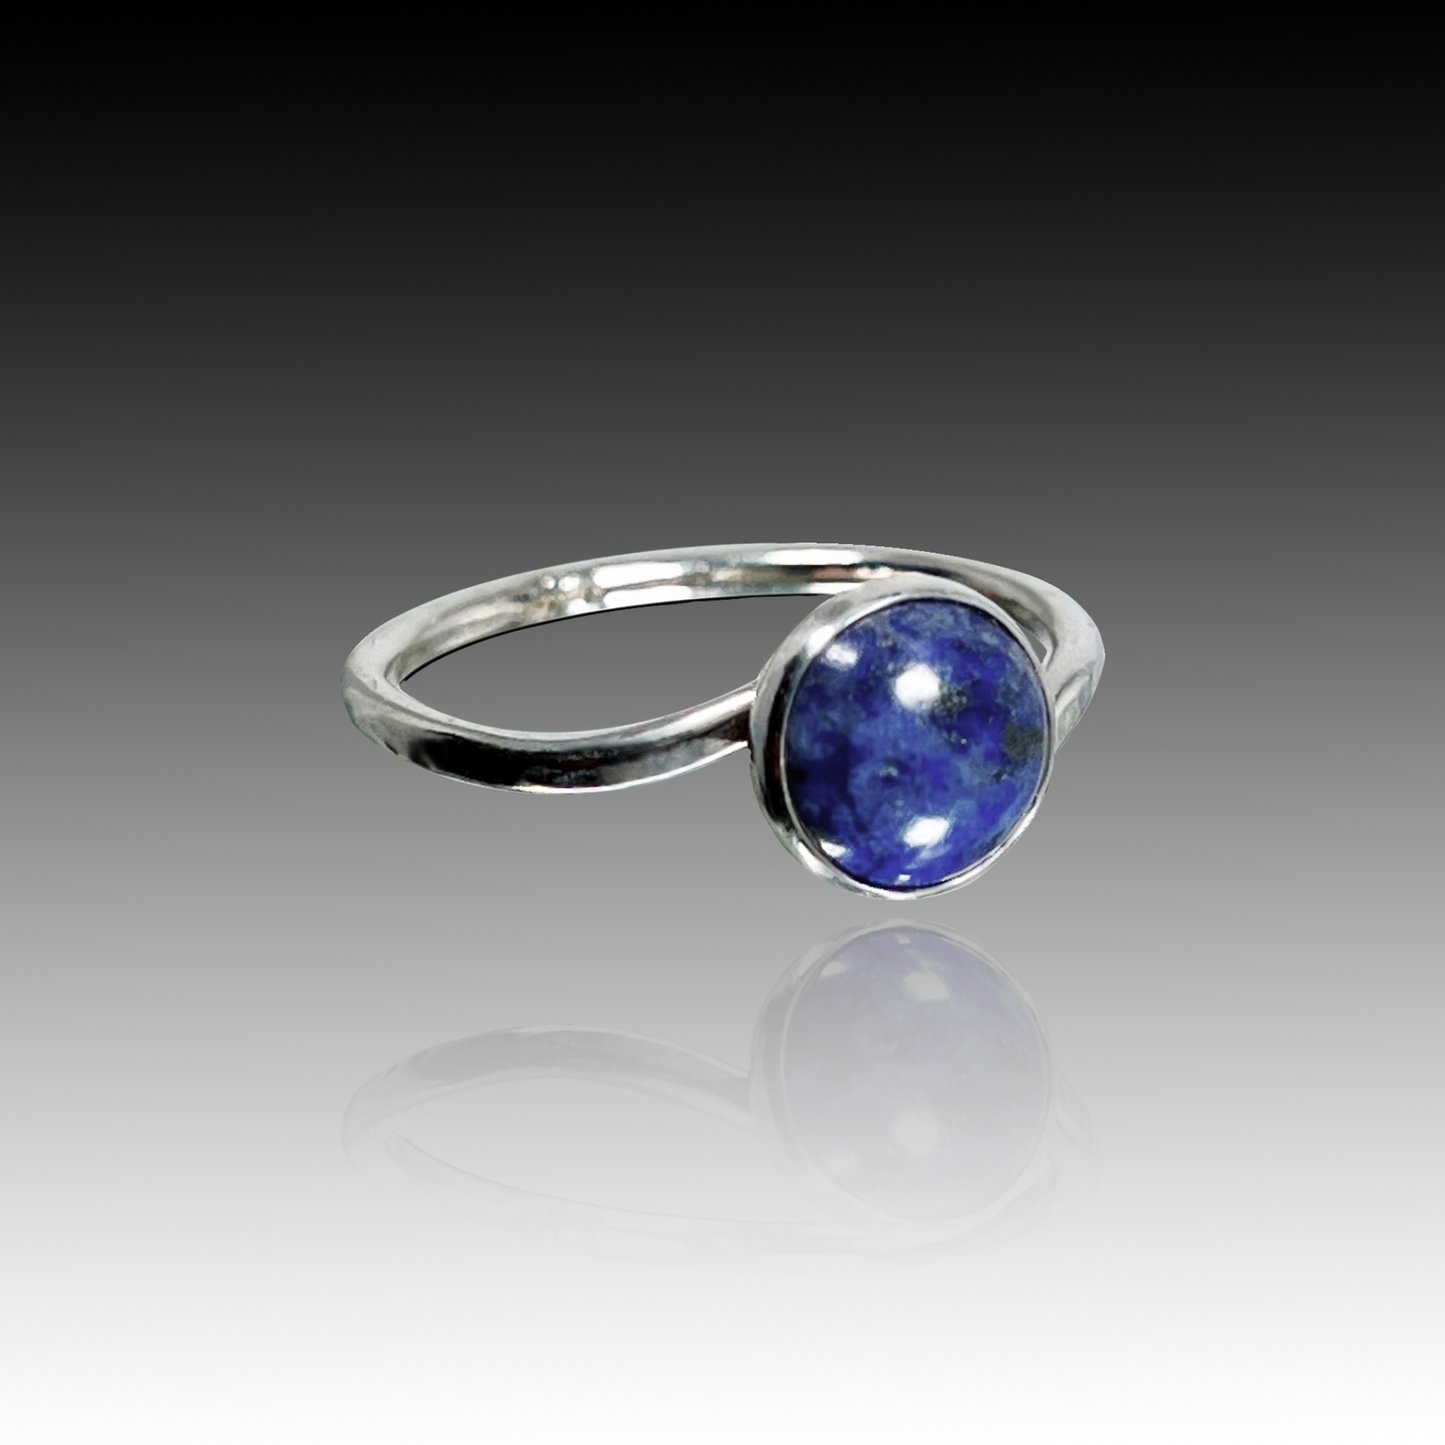 "Jaylee" - Lapis Lazuli & Sterling Silver Ring